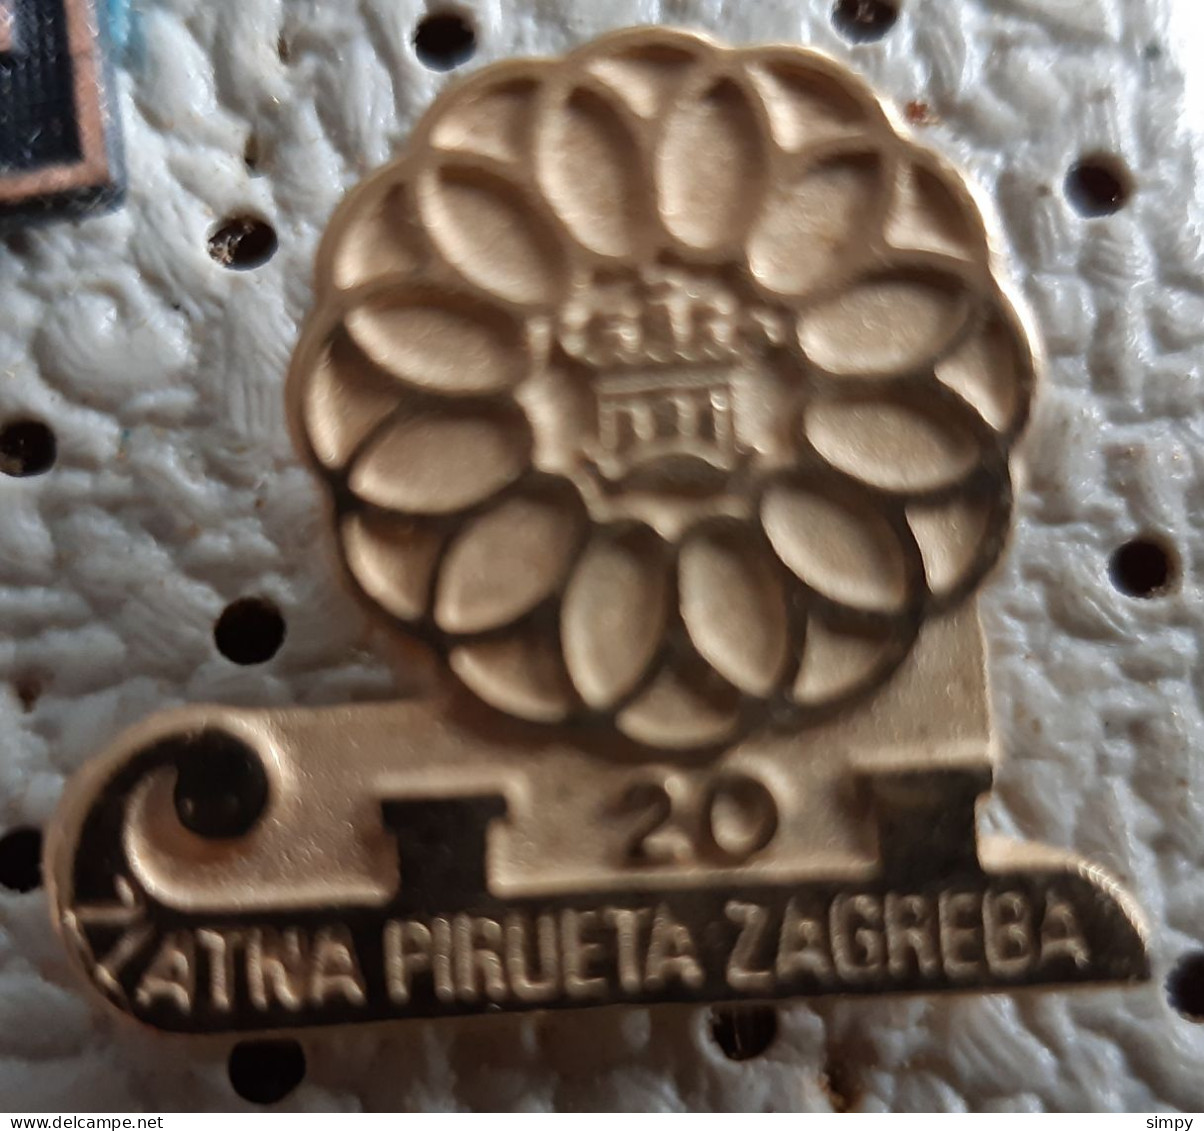 Zlatna Pirueta Zagreb 20 Years  Figure Skating Skate  YUgoslavia Vintage Pin Badge - Pattinaggio Artistico